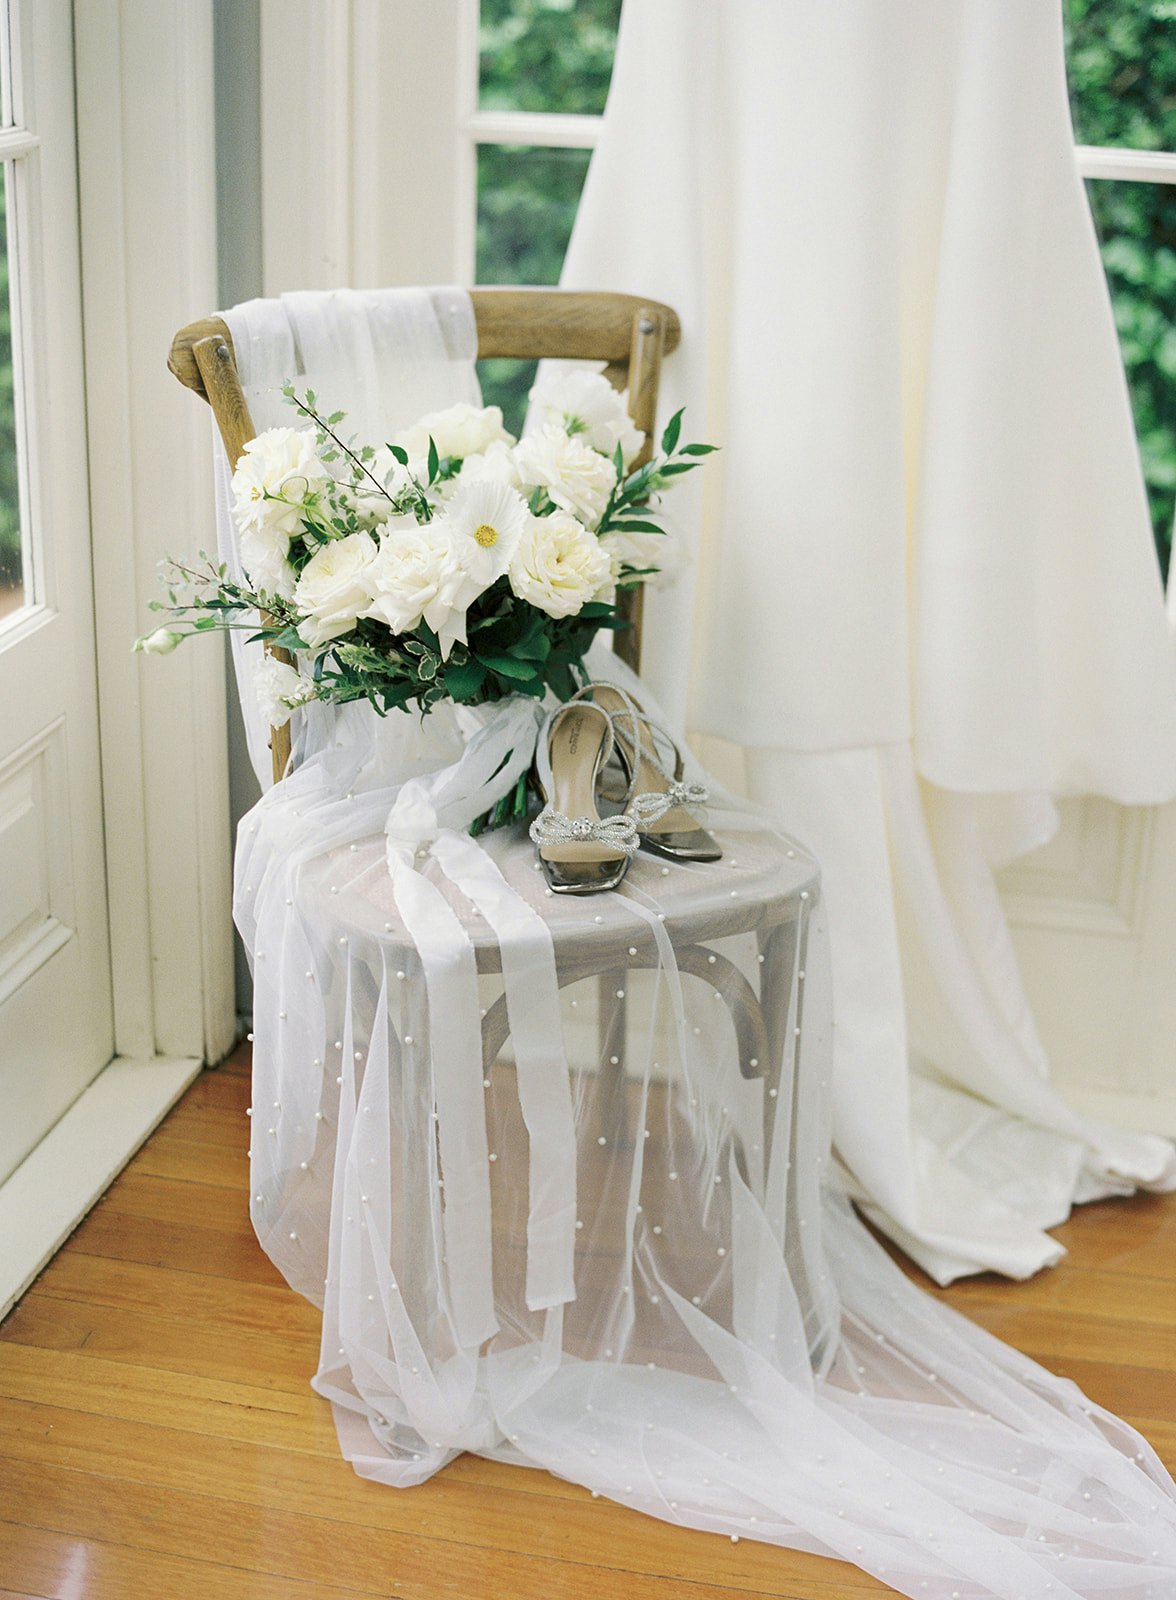 Wedding veil and flowers